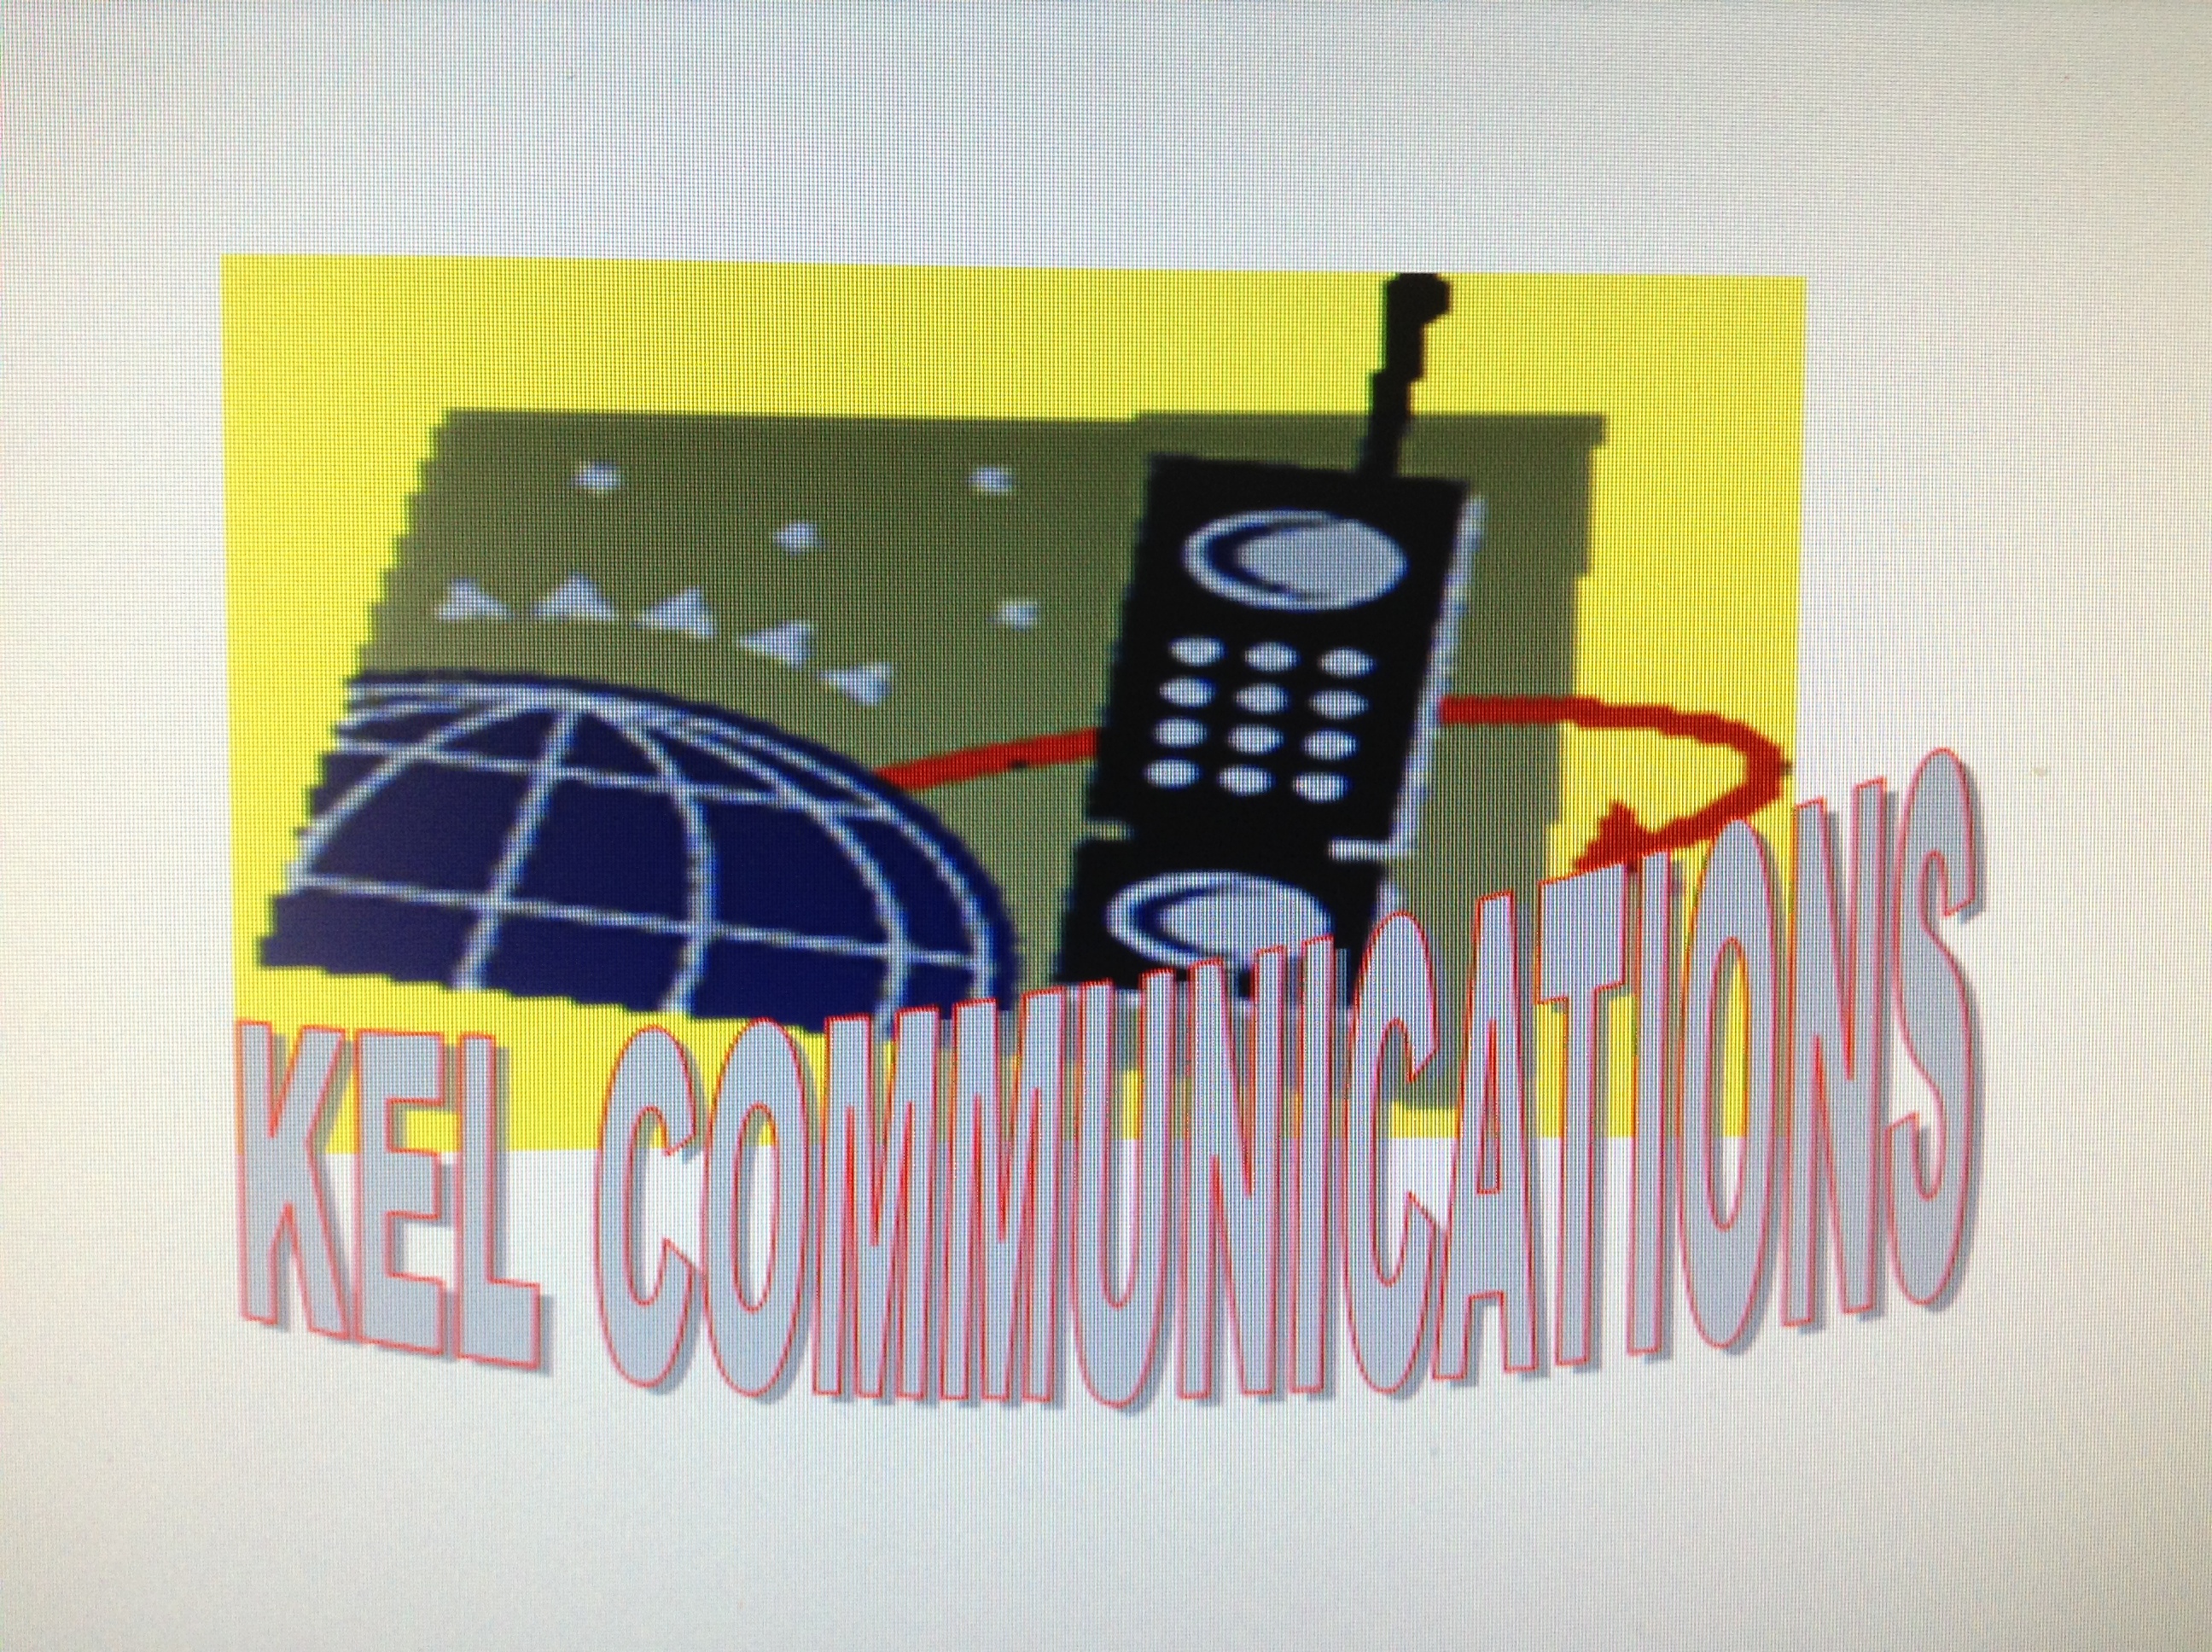 Kel Communications Logo